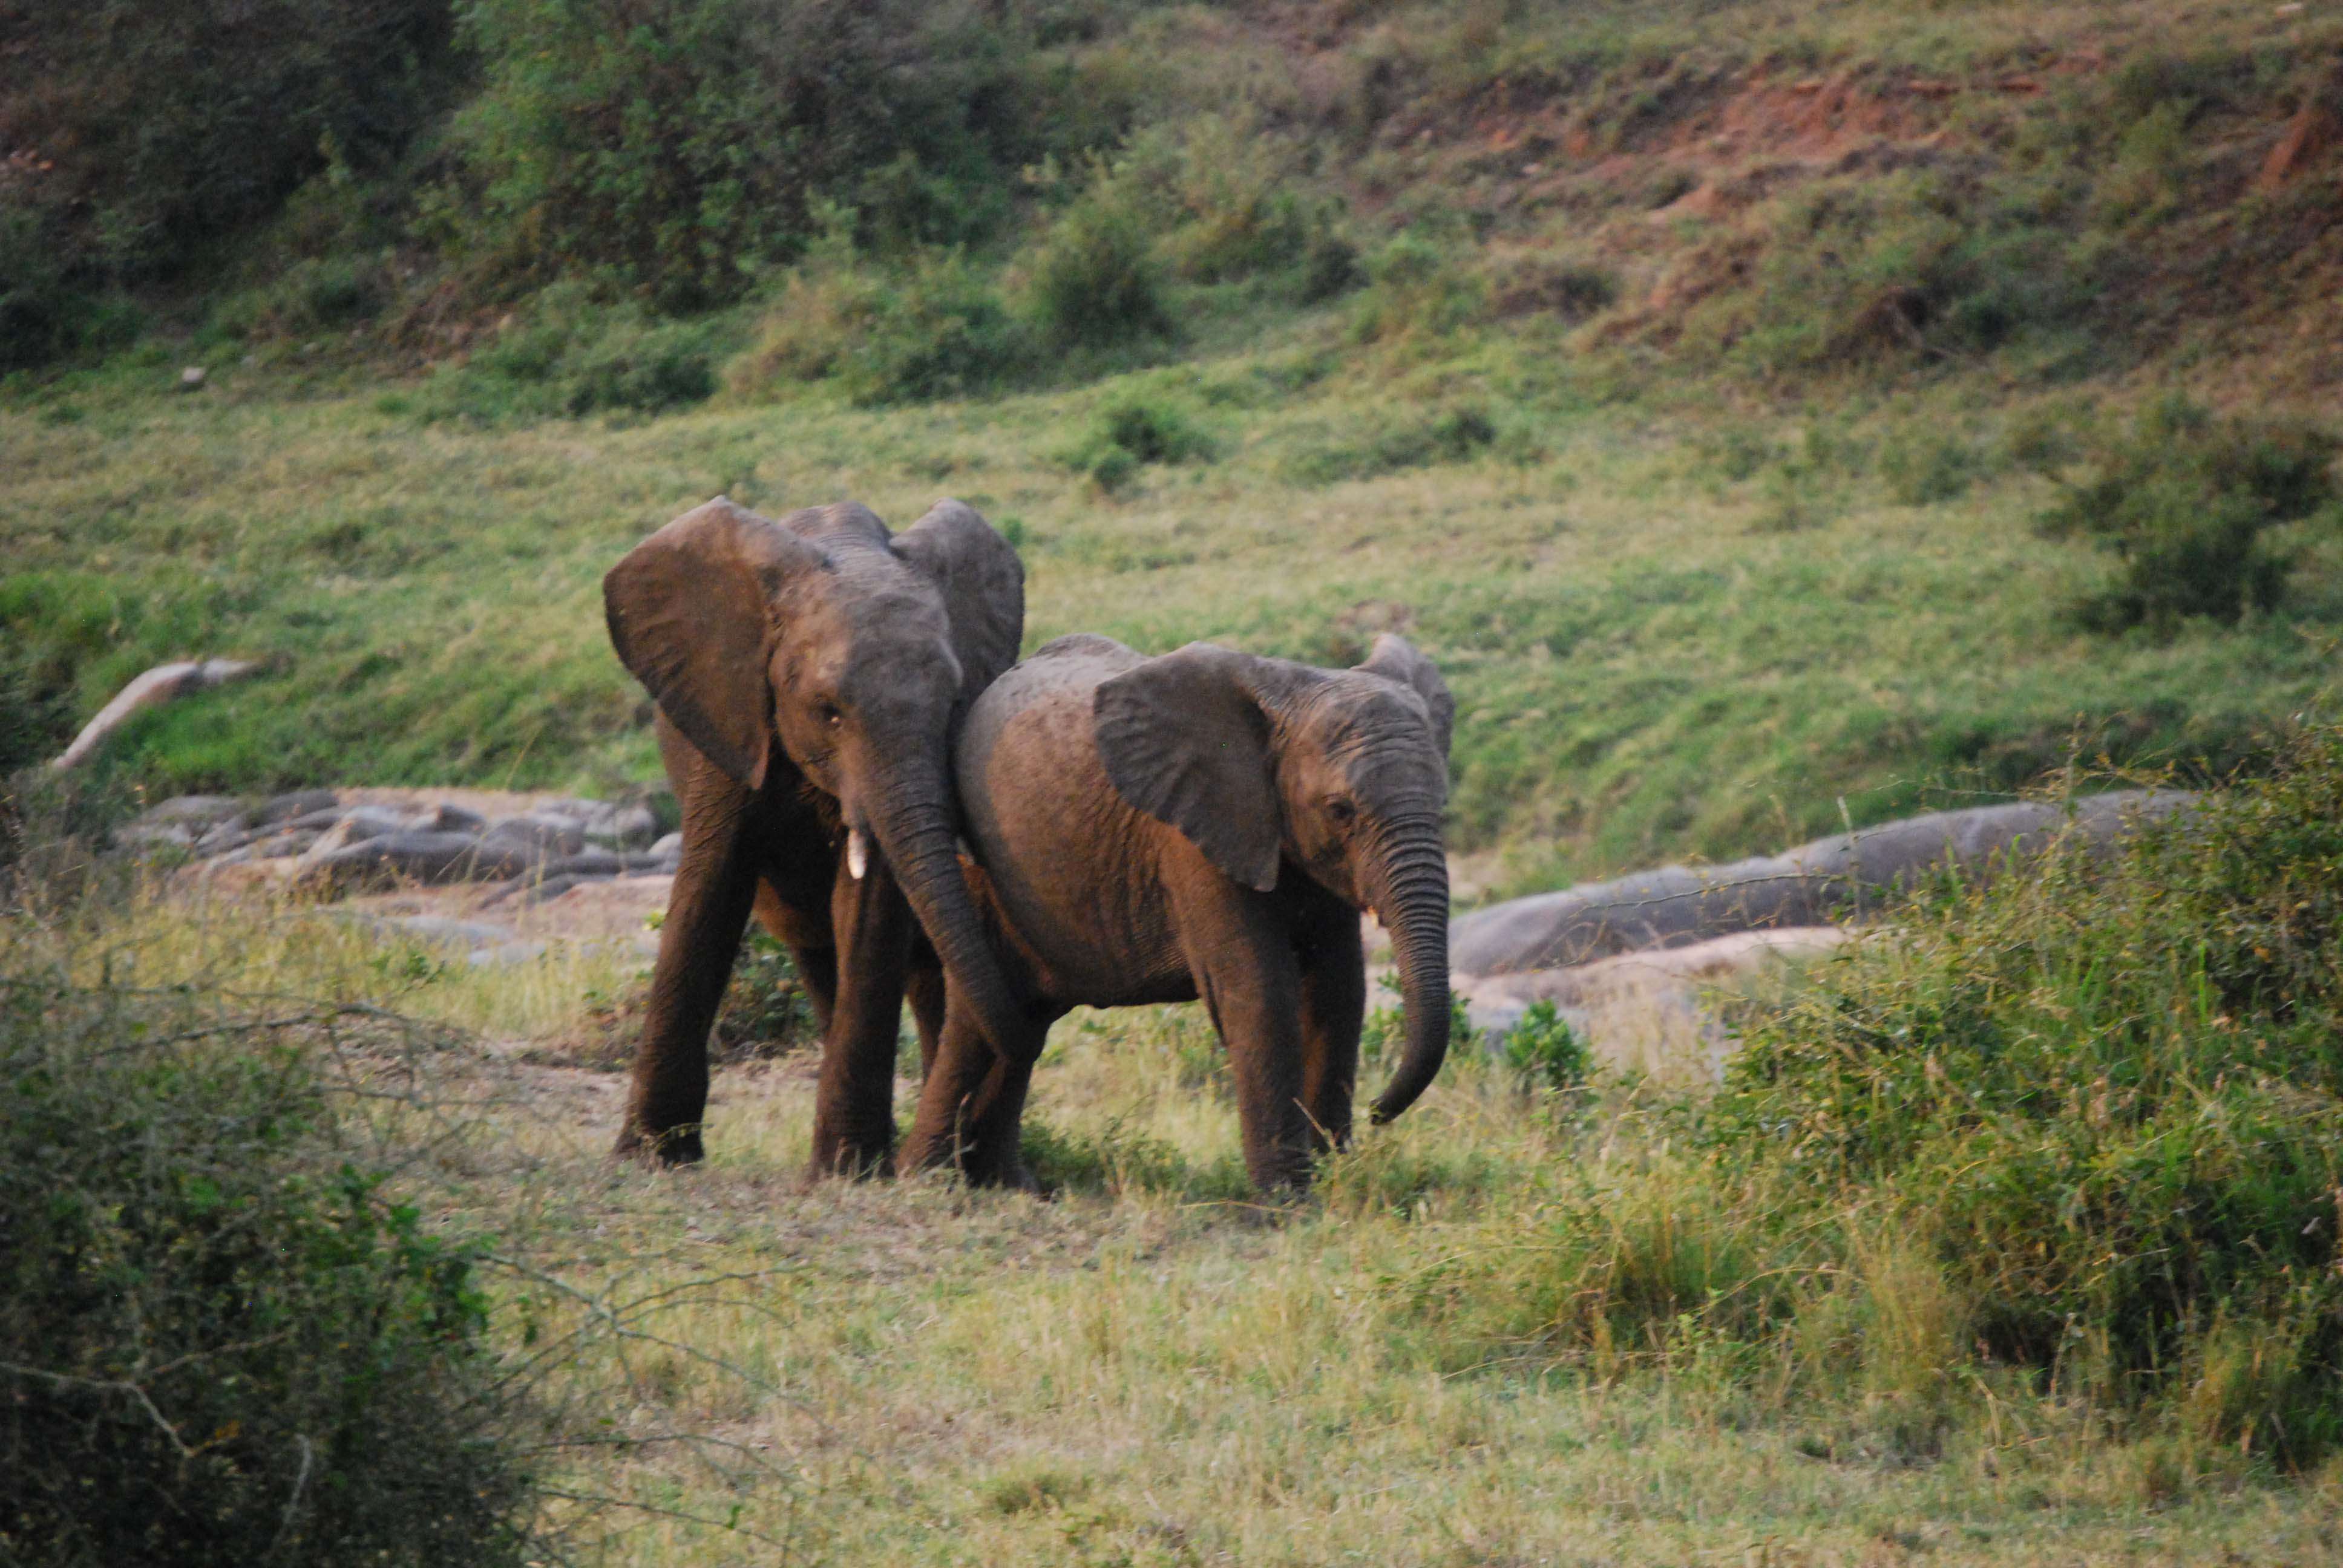 Nuestro primer safari - Regreso al Mara - Kenia (2)